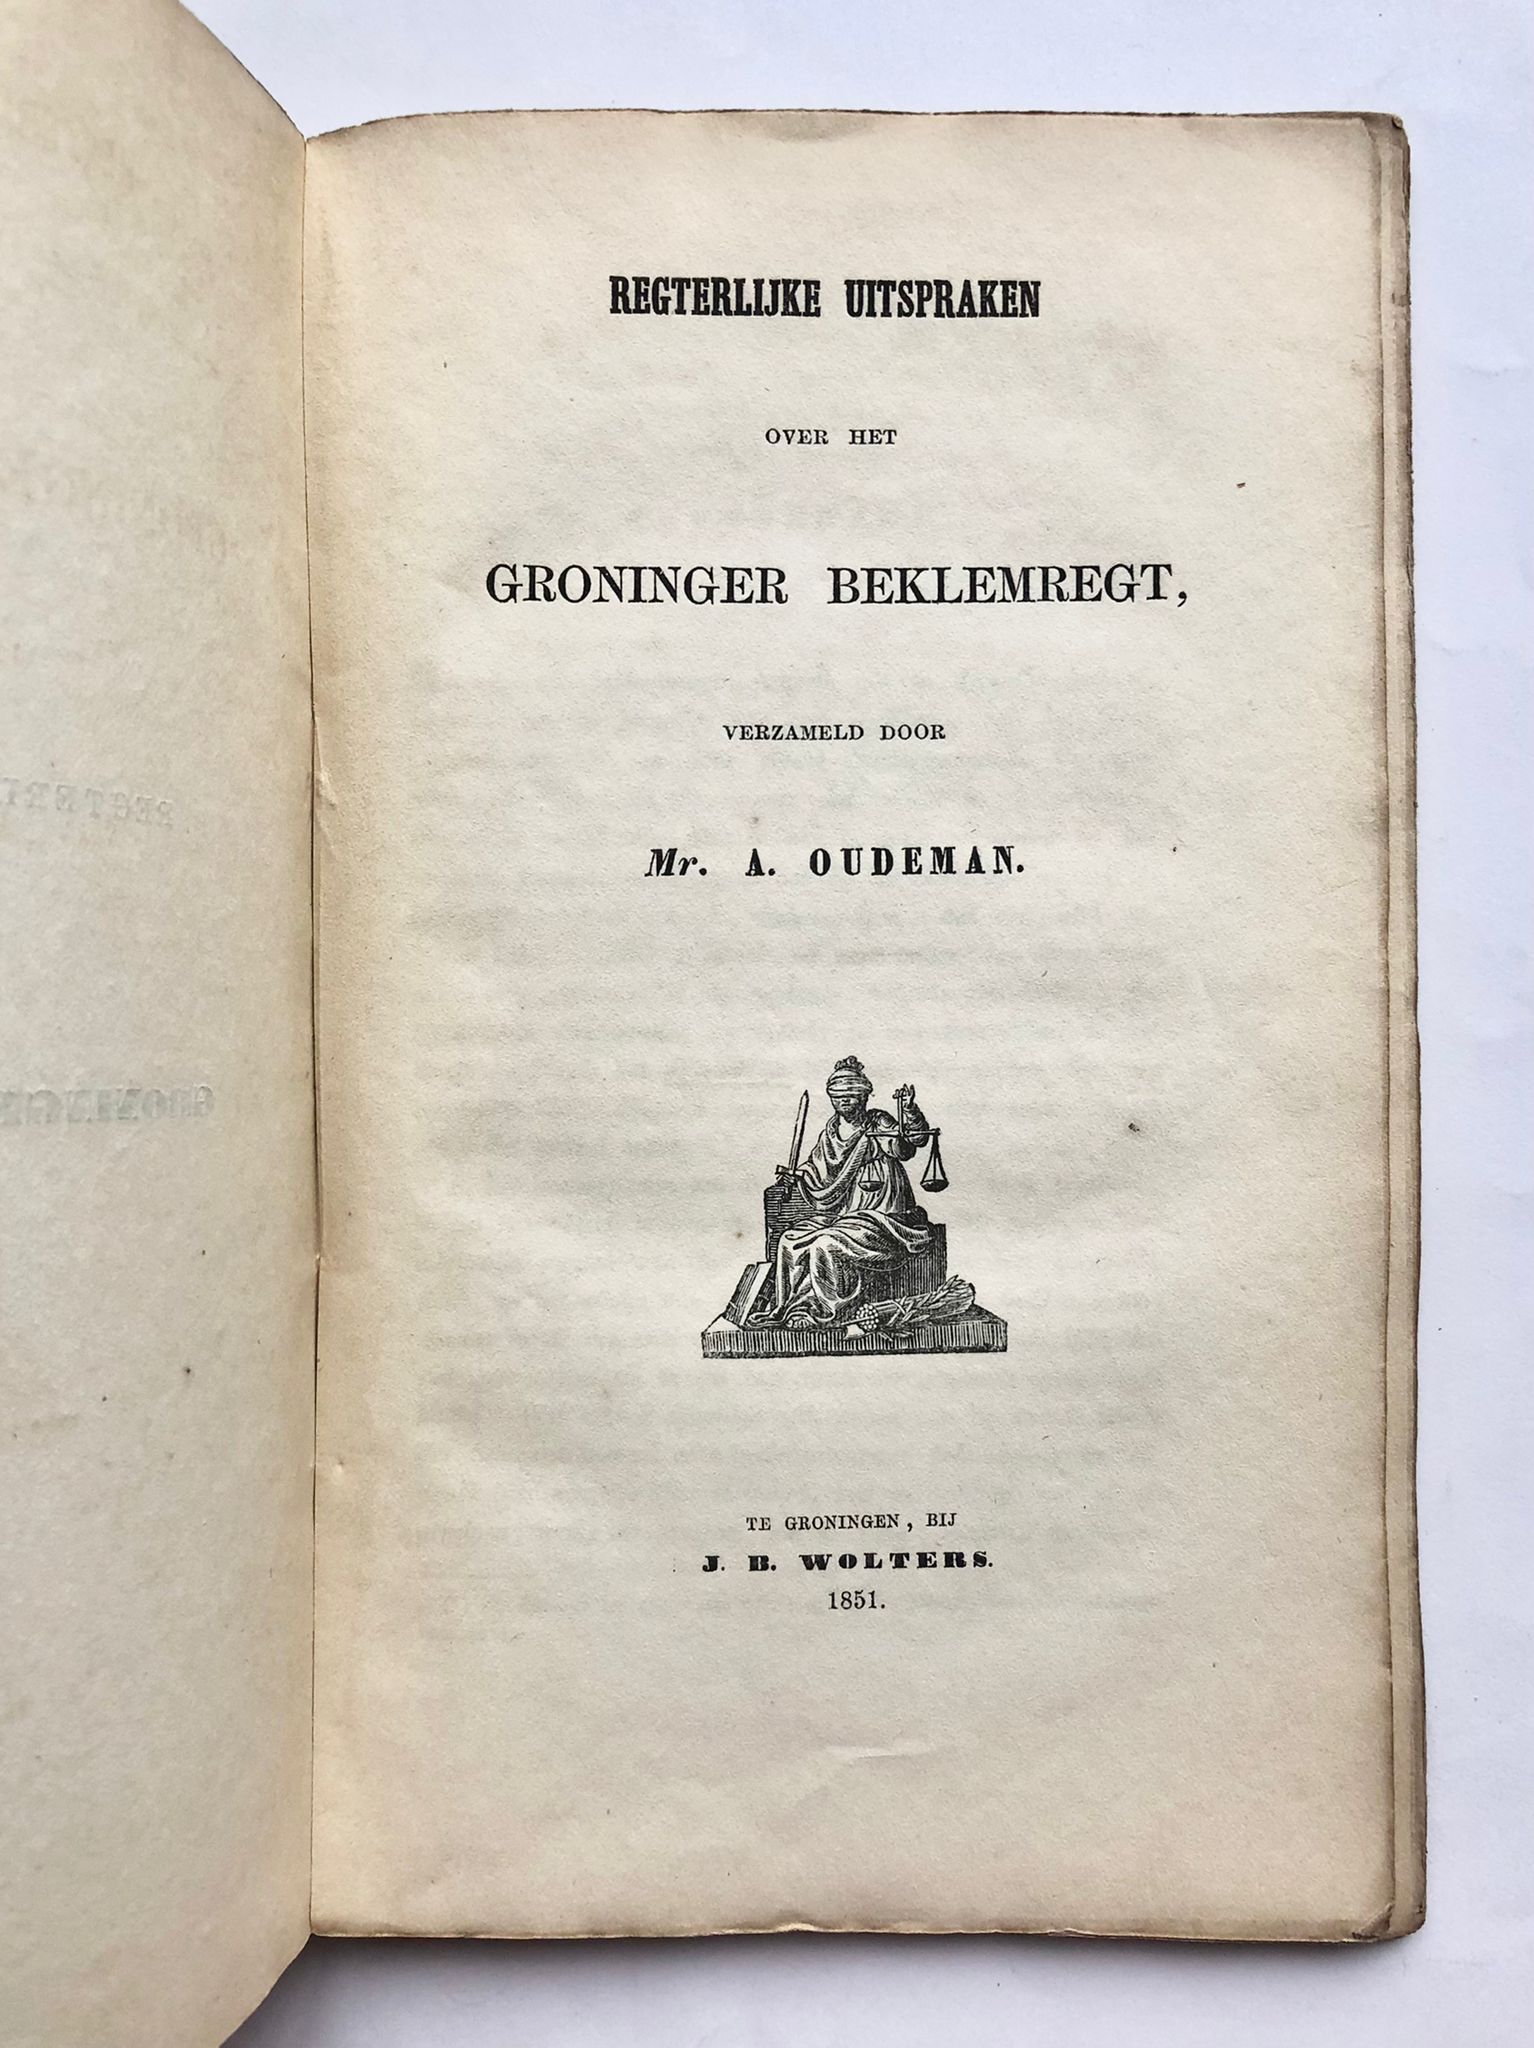 [Groningen, first edition] Regterlijke uitspraken over het Groninger beklemregt, J. B. Wolters, Te Groningen, 1851, 95 pp.